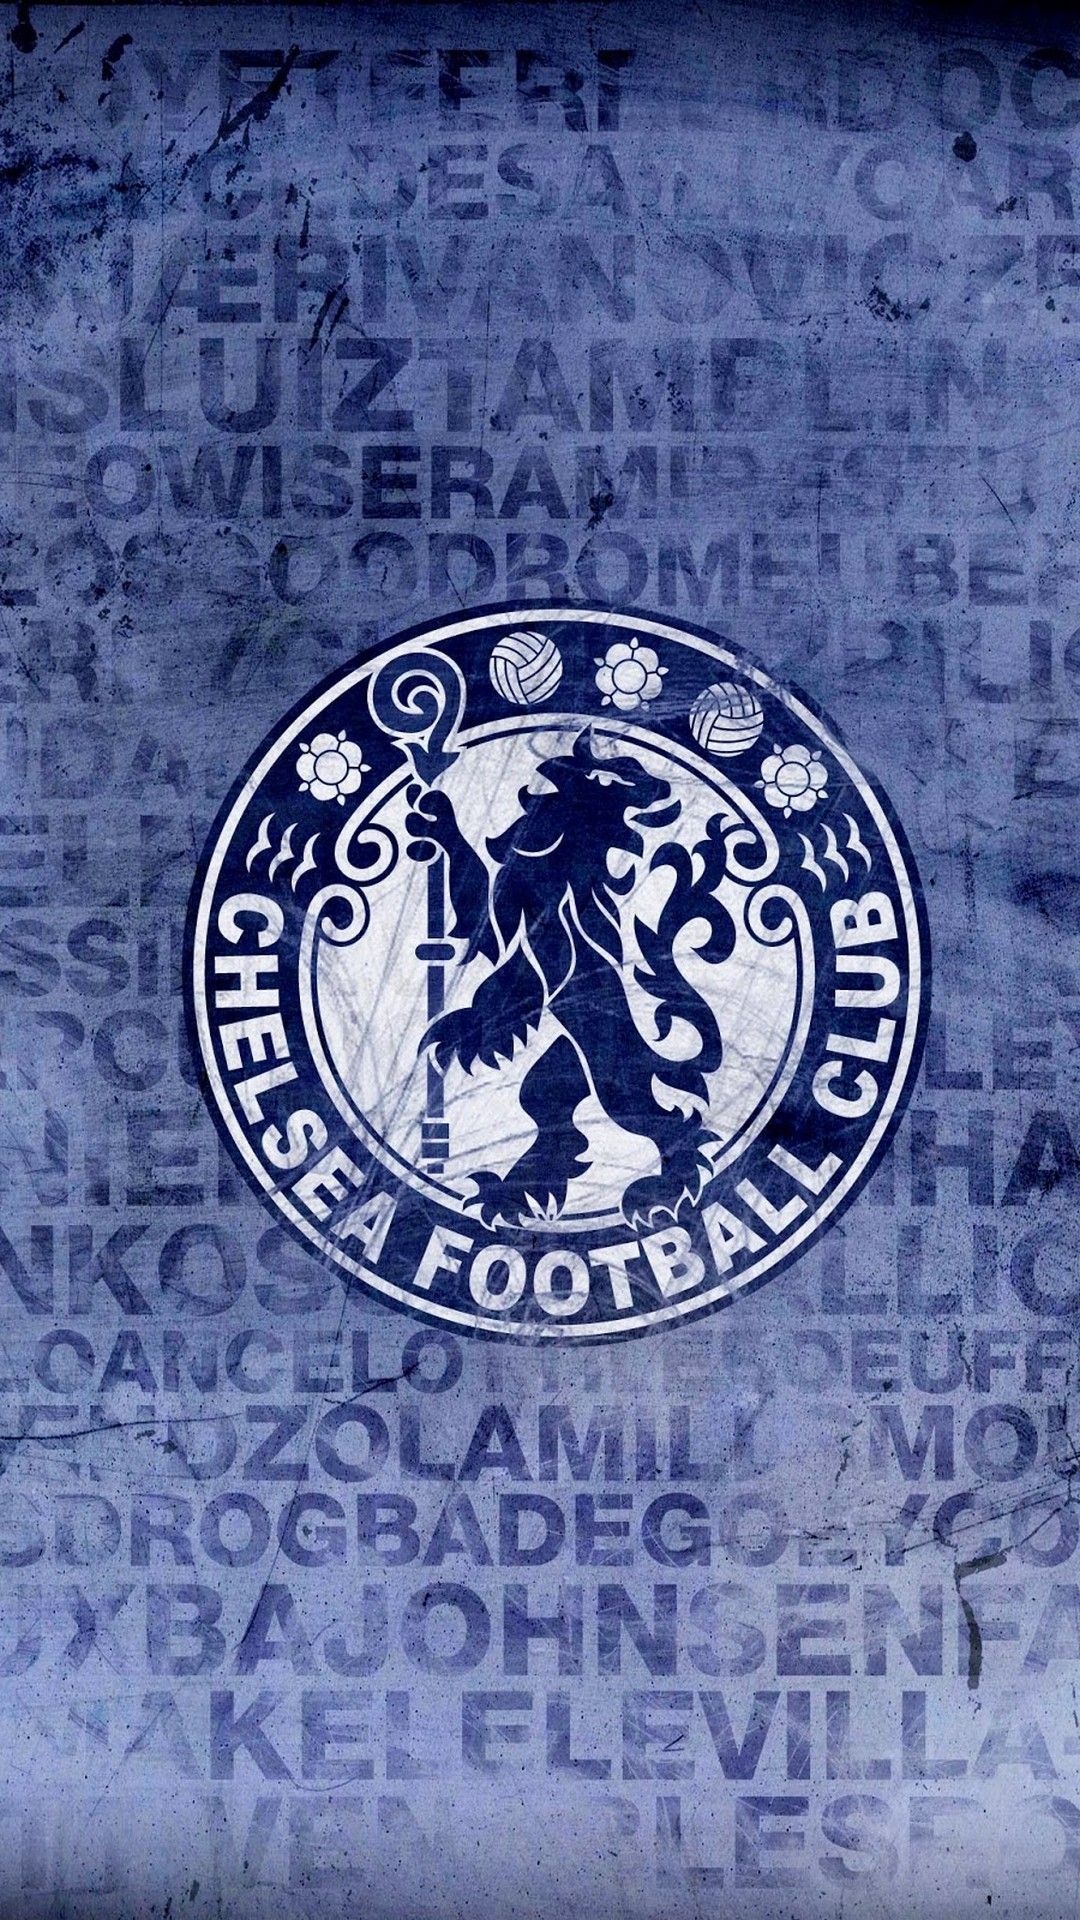 Wallpaper Chelsea Football Club iPhone. Best Wallpaper HD. Chelsea football club wallpaper, Wallpaper chelsea, Chelsea football club